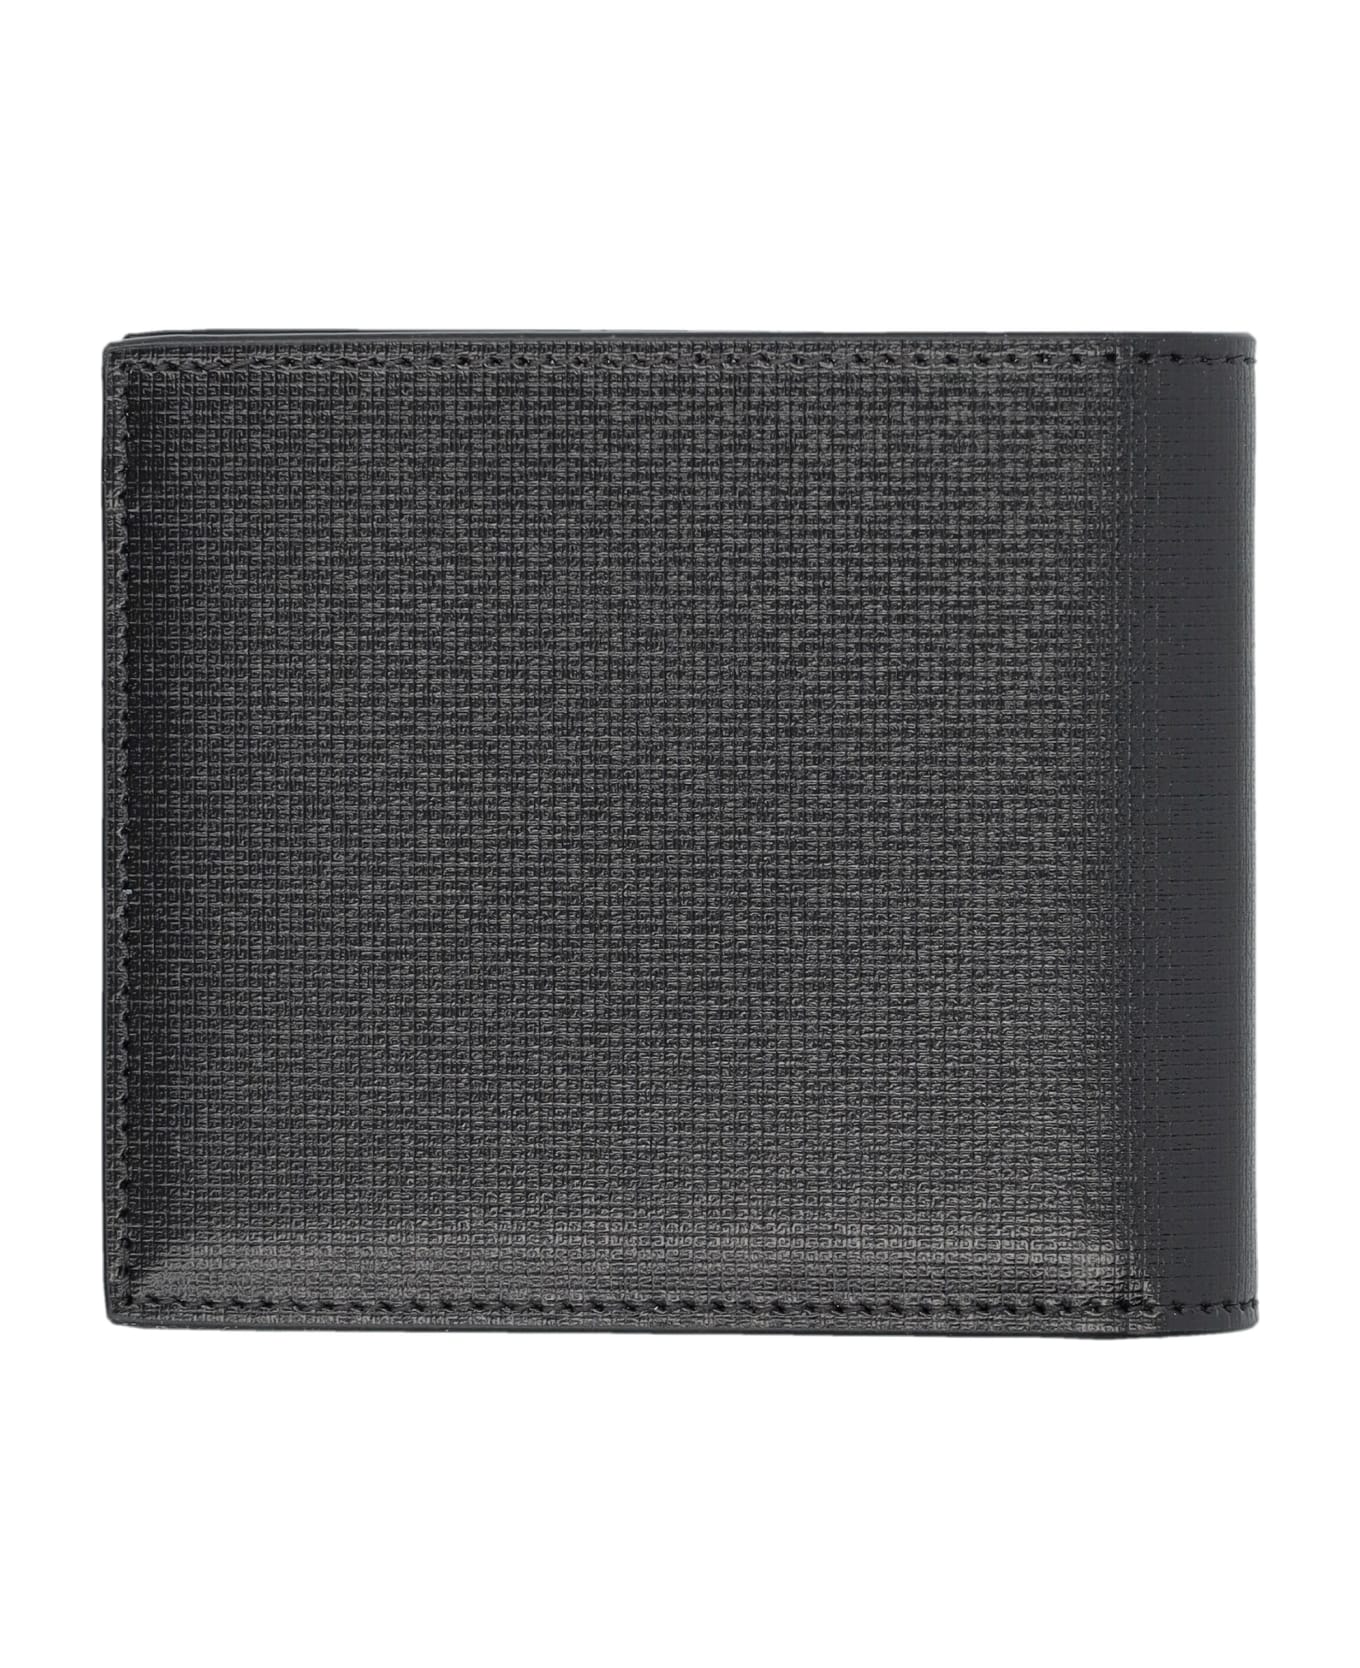 Givenchy 8cc Billfold Wallet - BLACK 財布